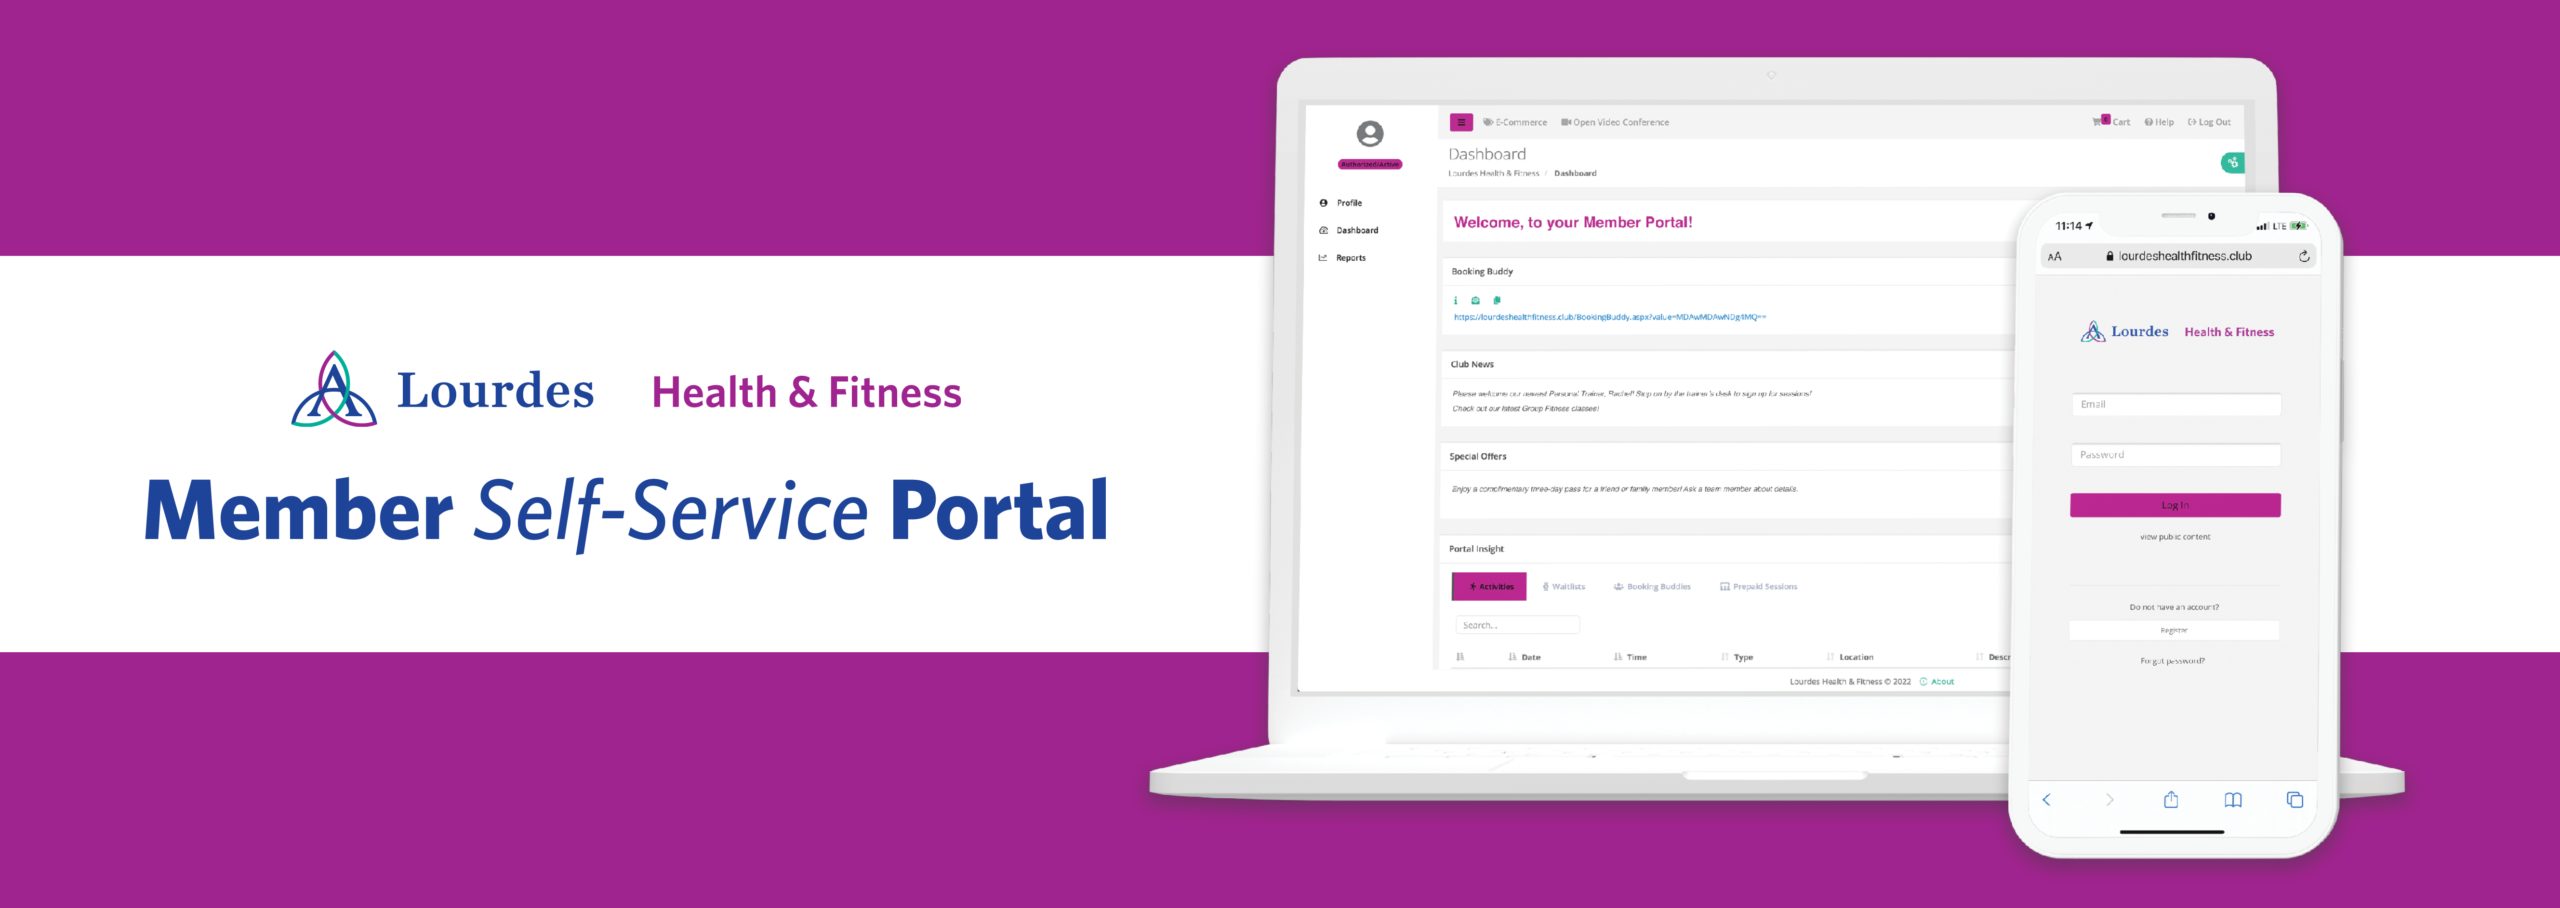 Lourdes Health & Fitness Member Portal